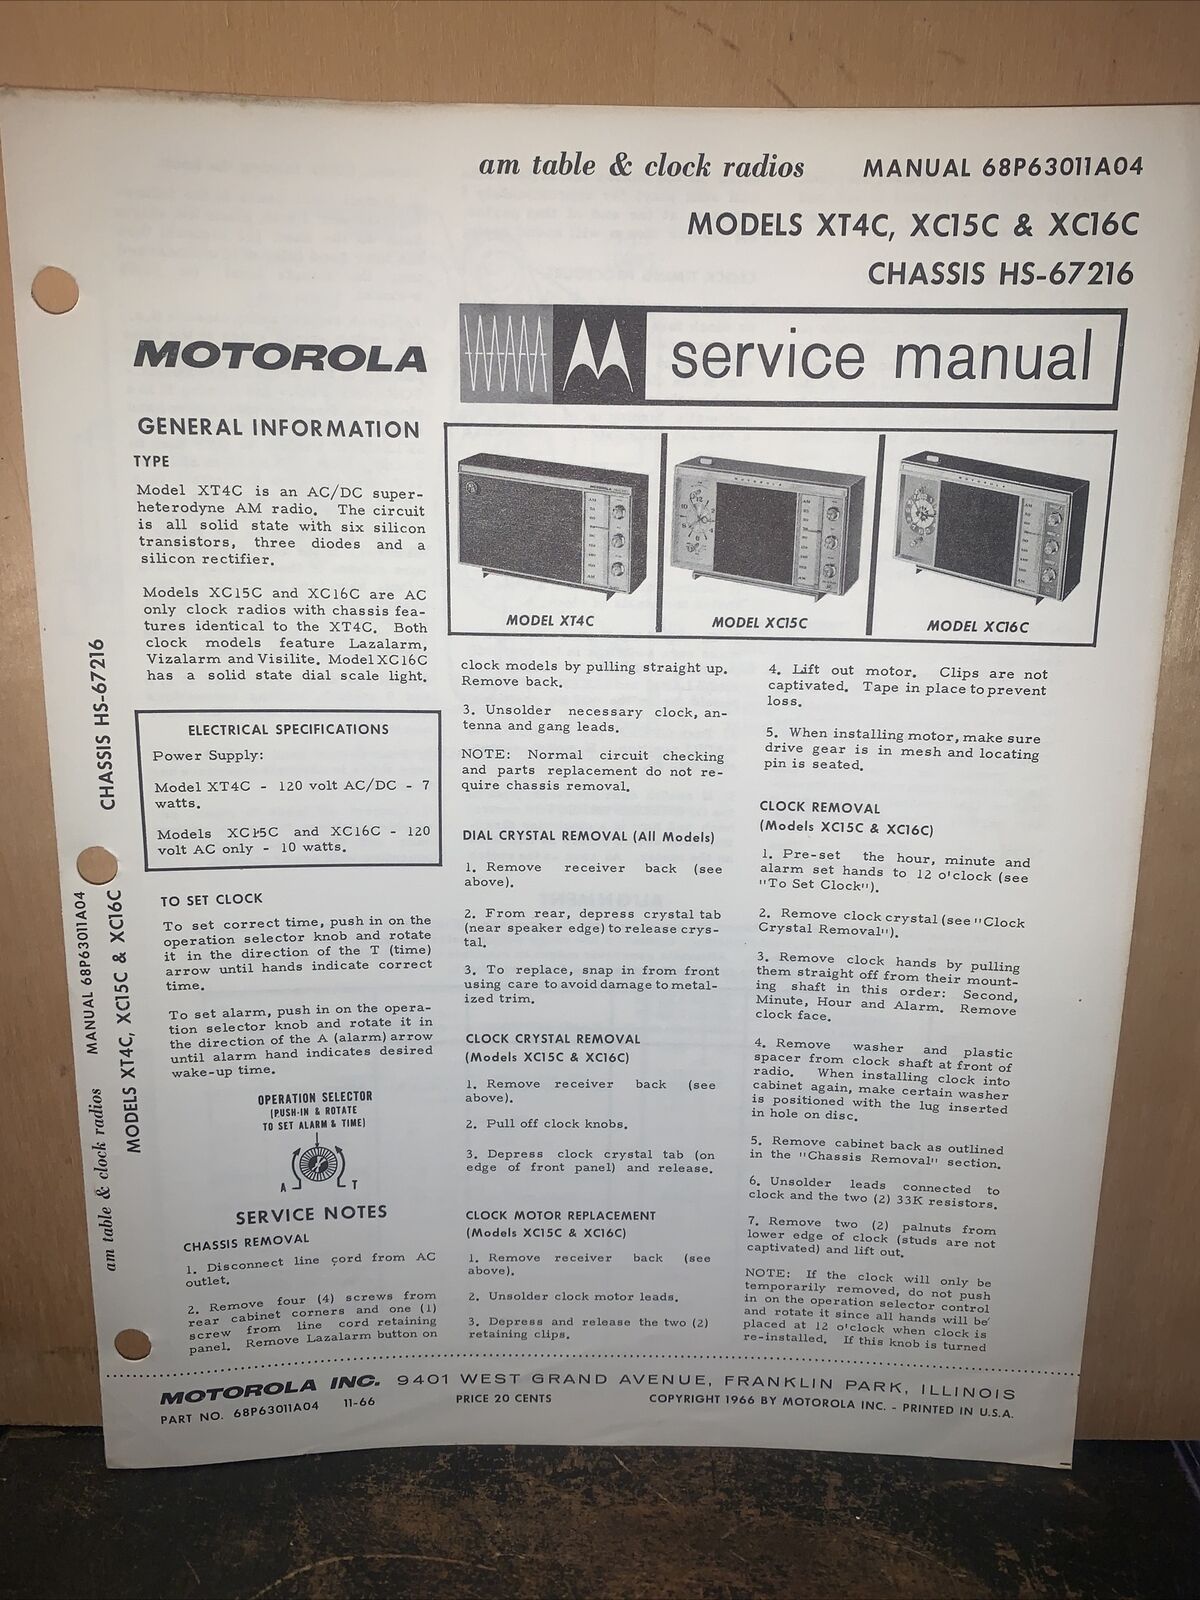 Motorola Radio Model #XT4C-Service Manual- Schematics.XC15C,XC16C Parts List.